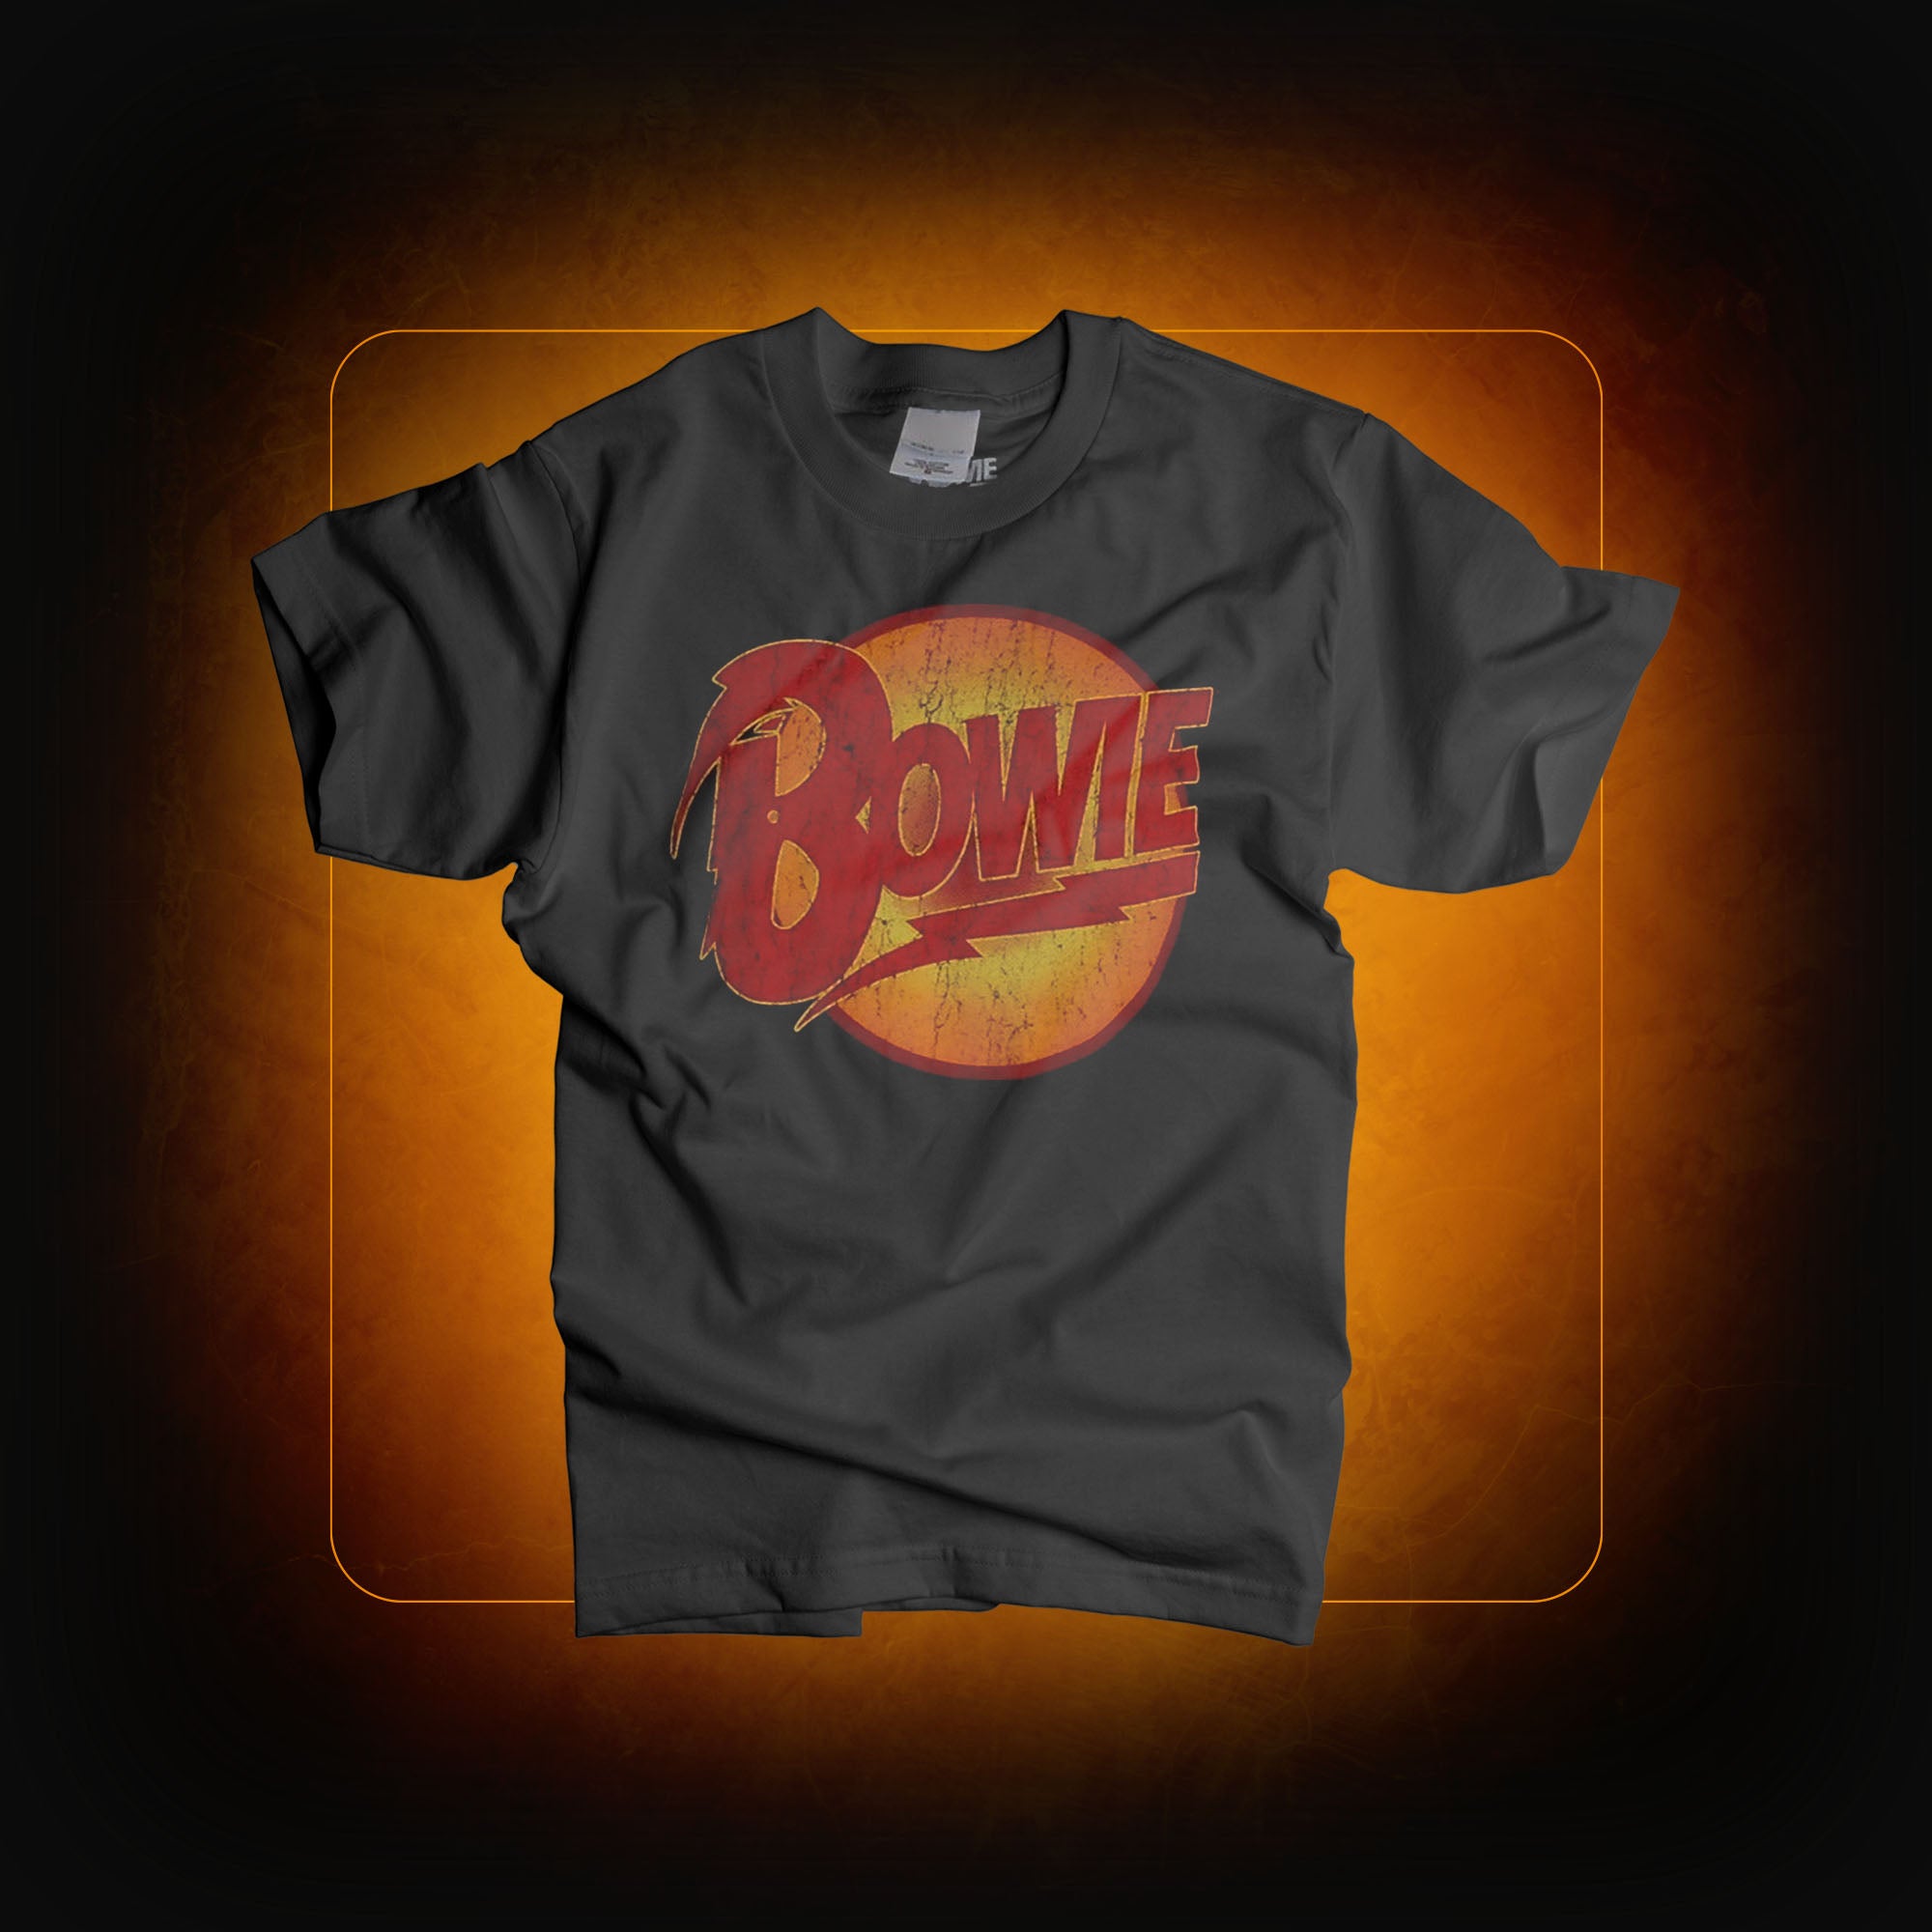 T-shirt Diamong Dogs vintage logo - David Bowie